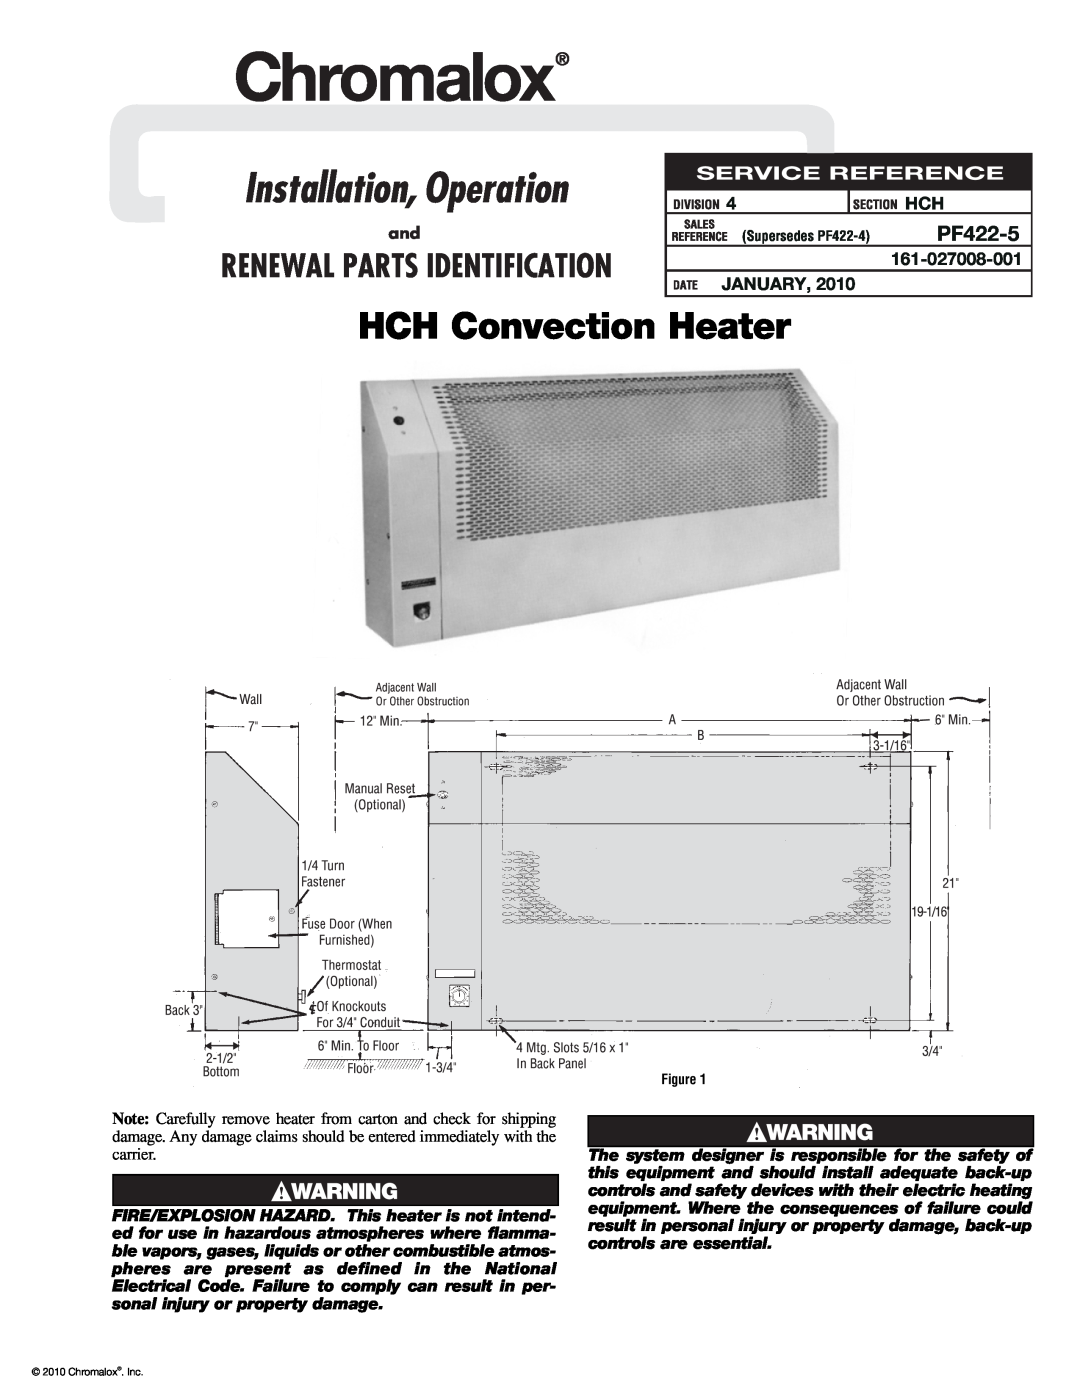 Chromalox PF422-5 manual January, Installation, Operation, HCH Convection Heater, Renewal Parts Identification 